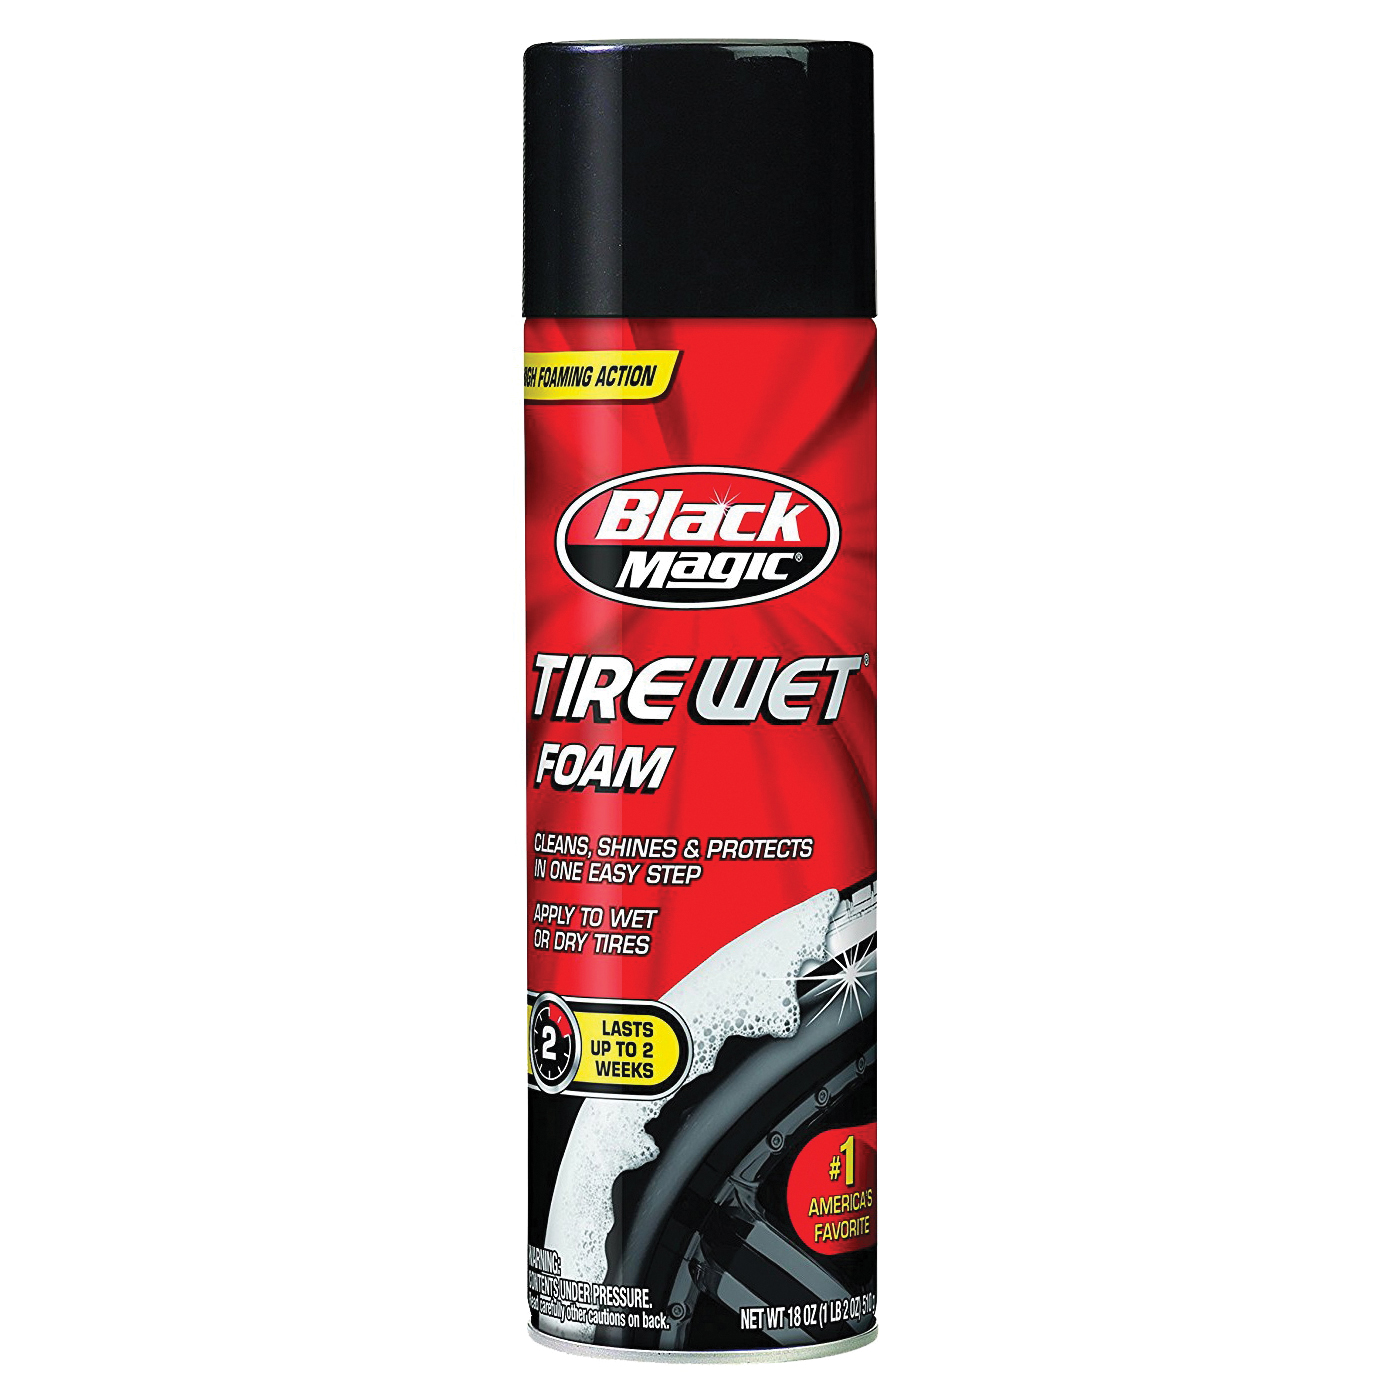 Black Magic 800002220/22145 Tire Wet Foam, 18 oz Aerosol Can, Liquid, Cherry